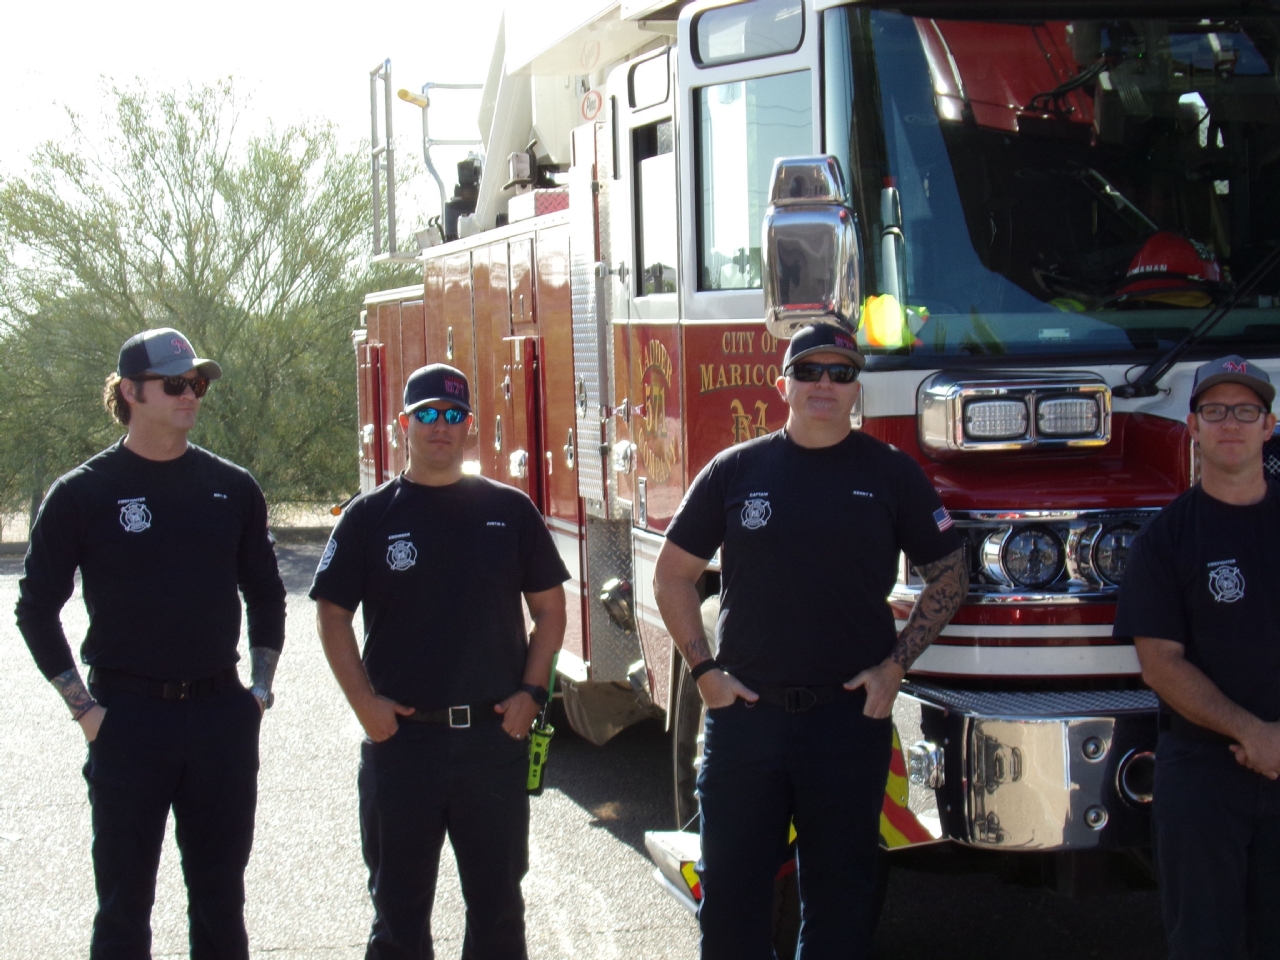 Maricopa Fire Department crew for ladder truck